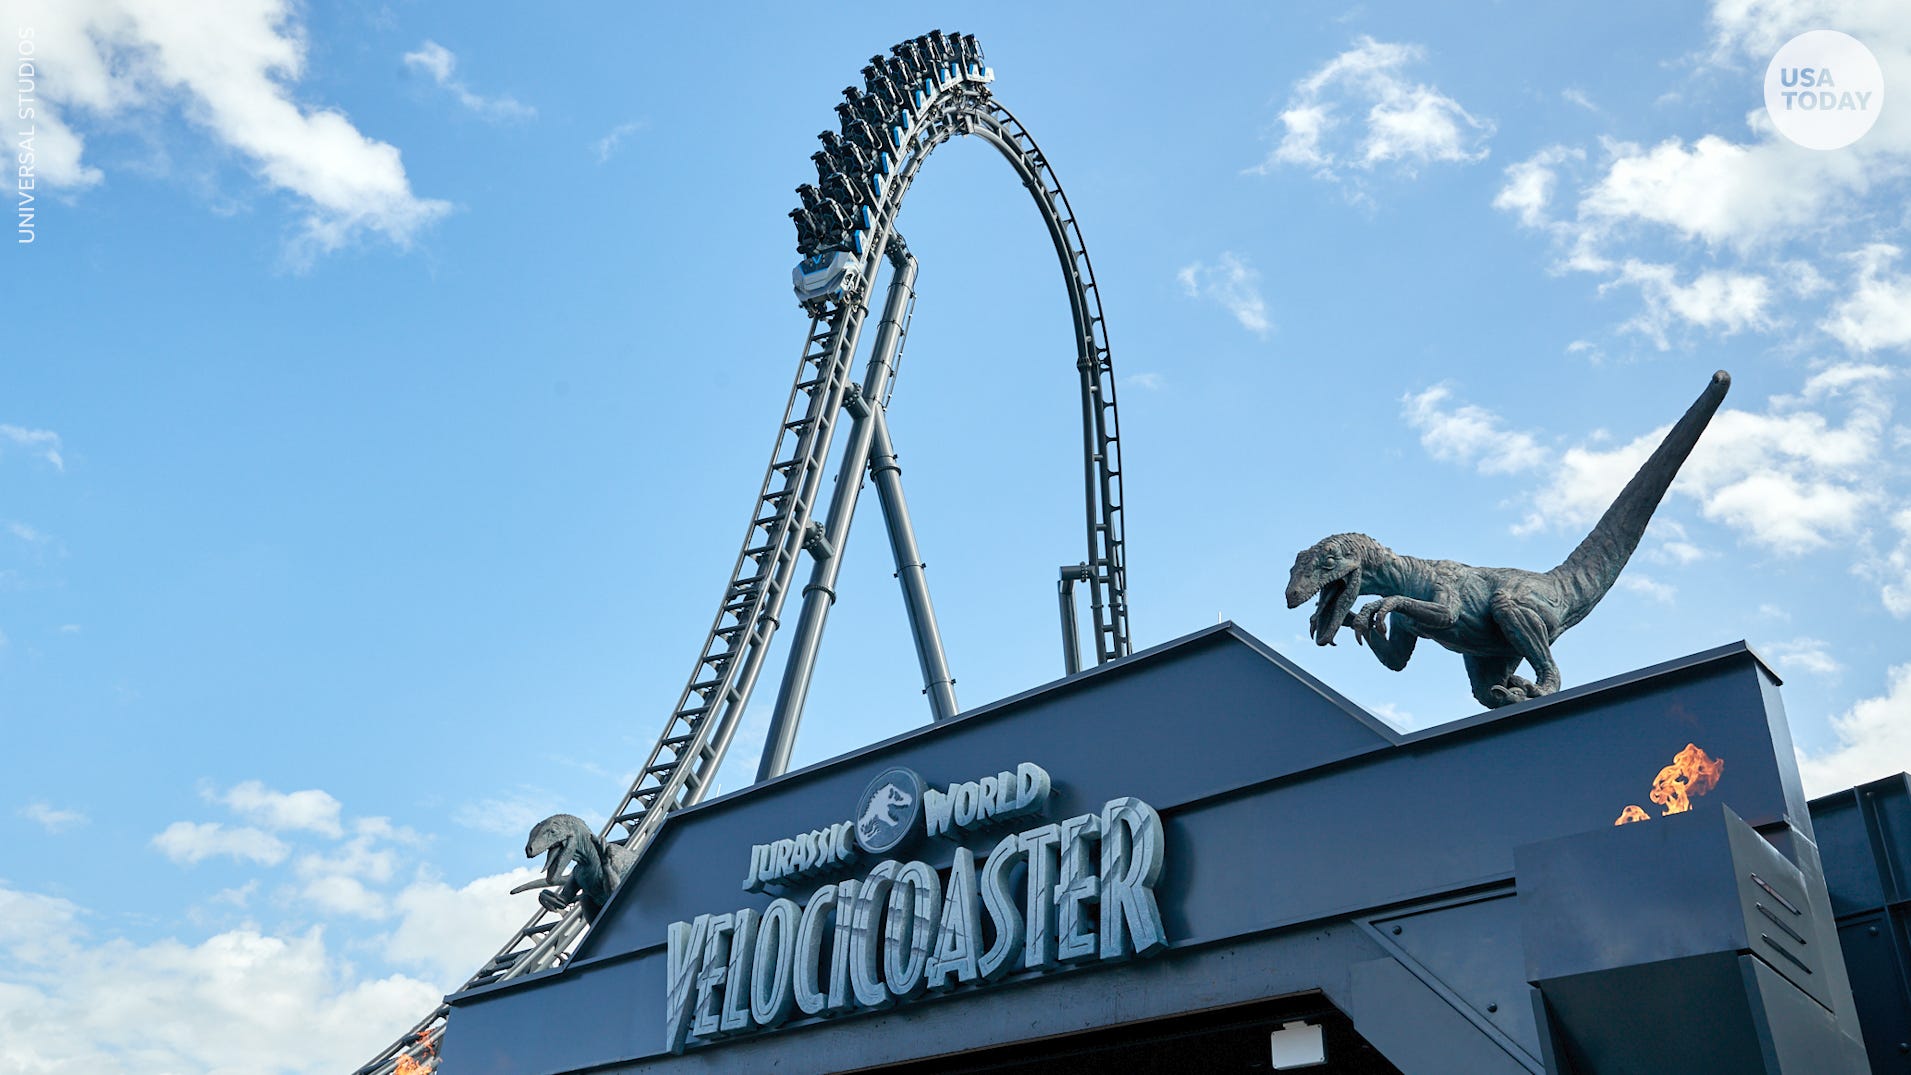 Universal Orlando to debut new Jurassic World VelociCoaster in June